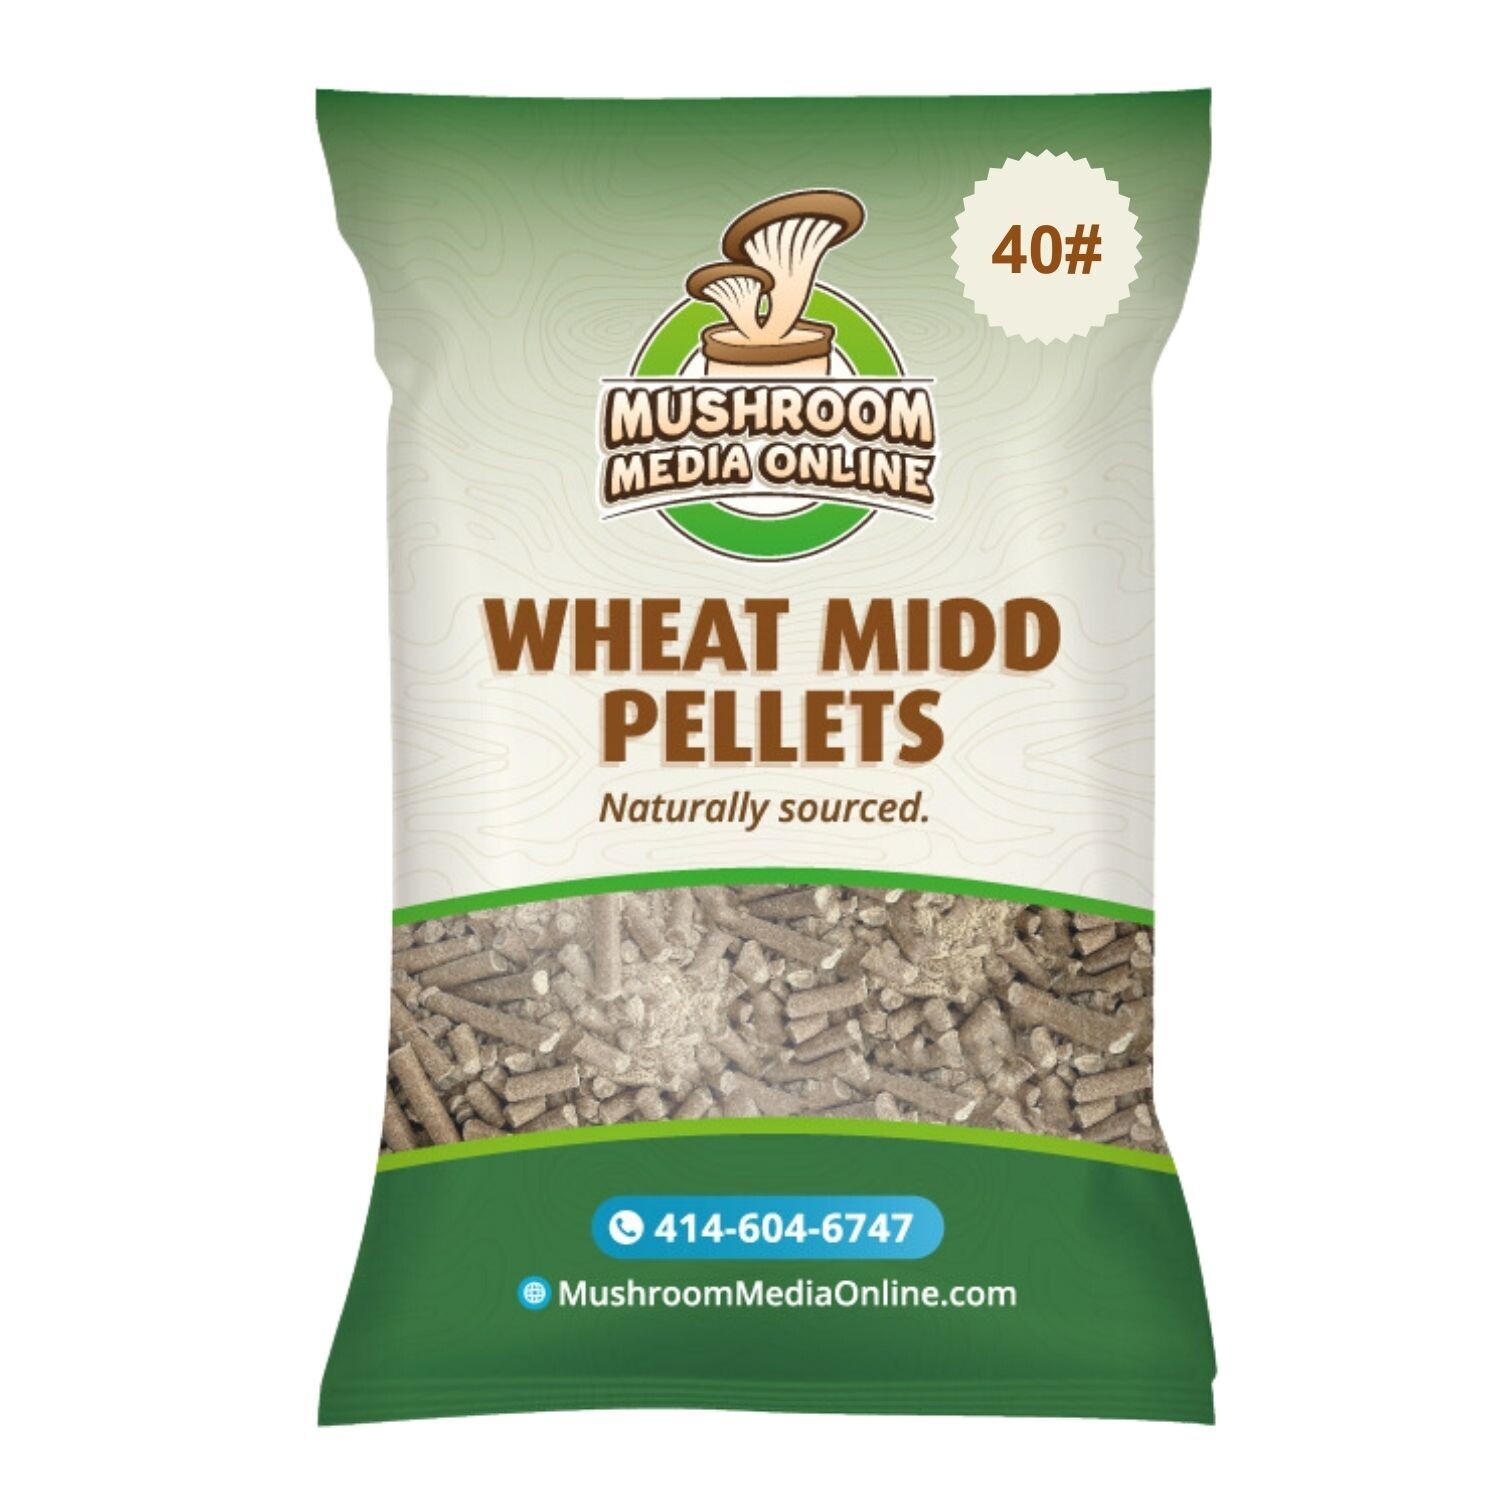 Wheat Midd Pellets - 40 Pound